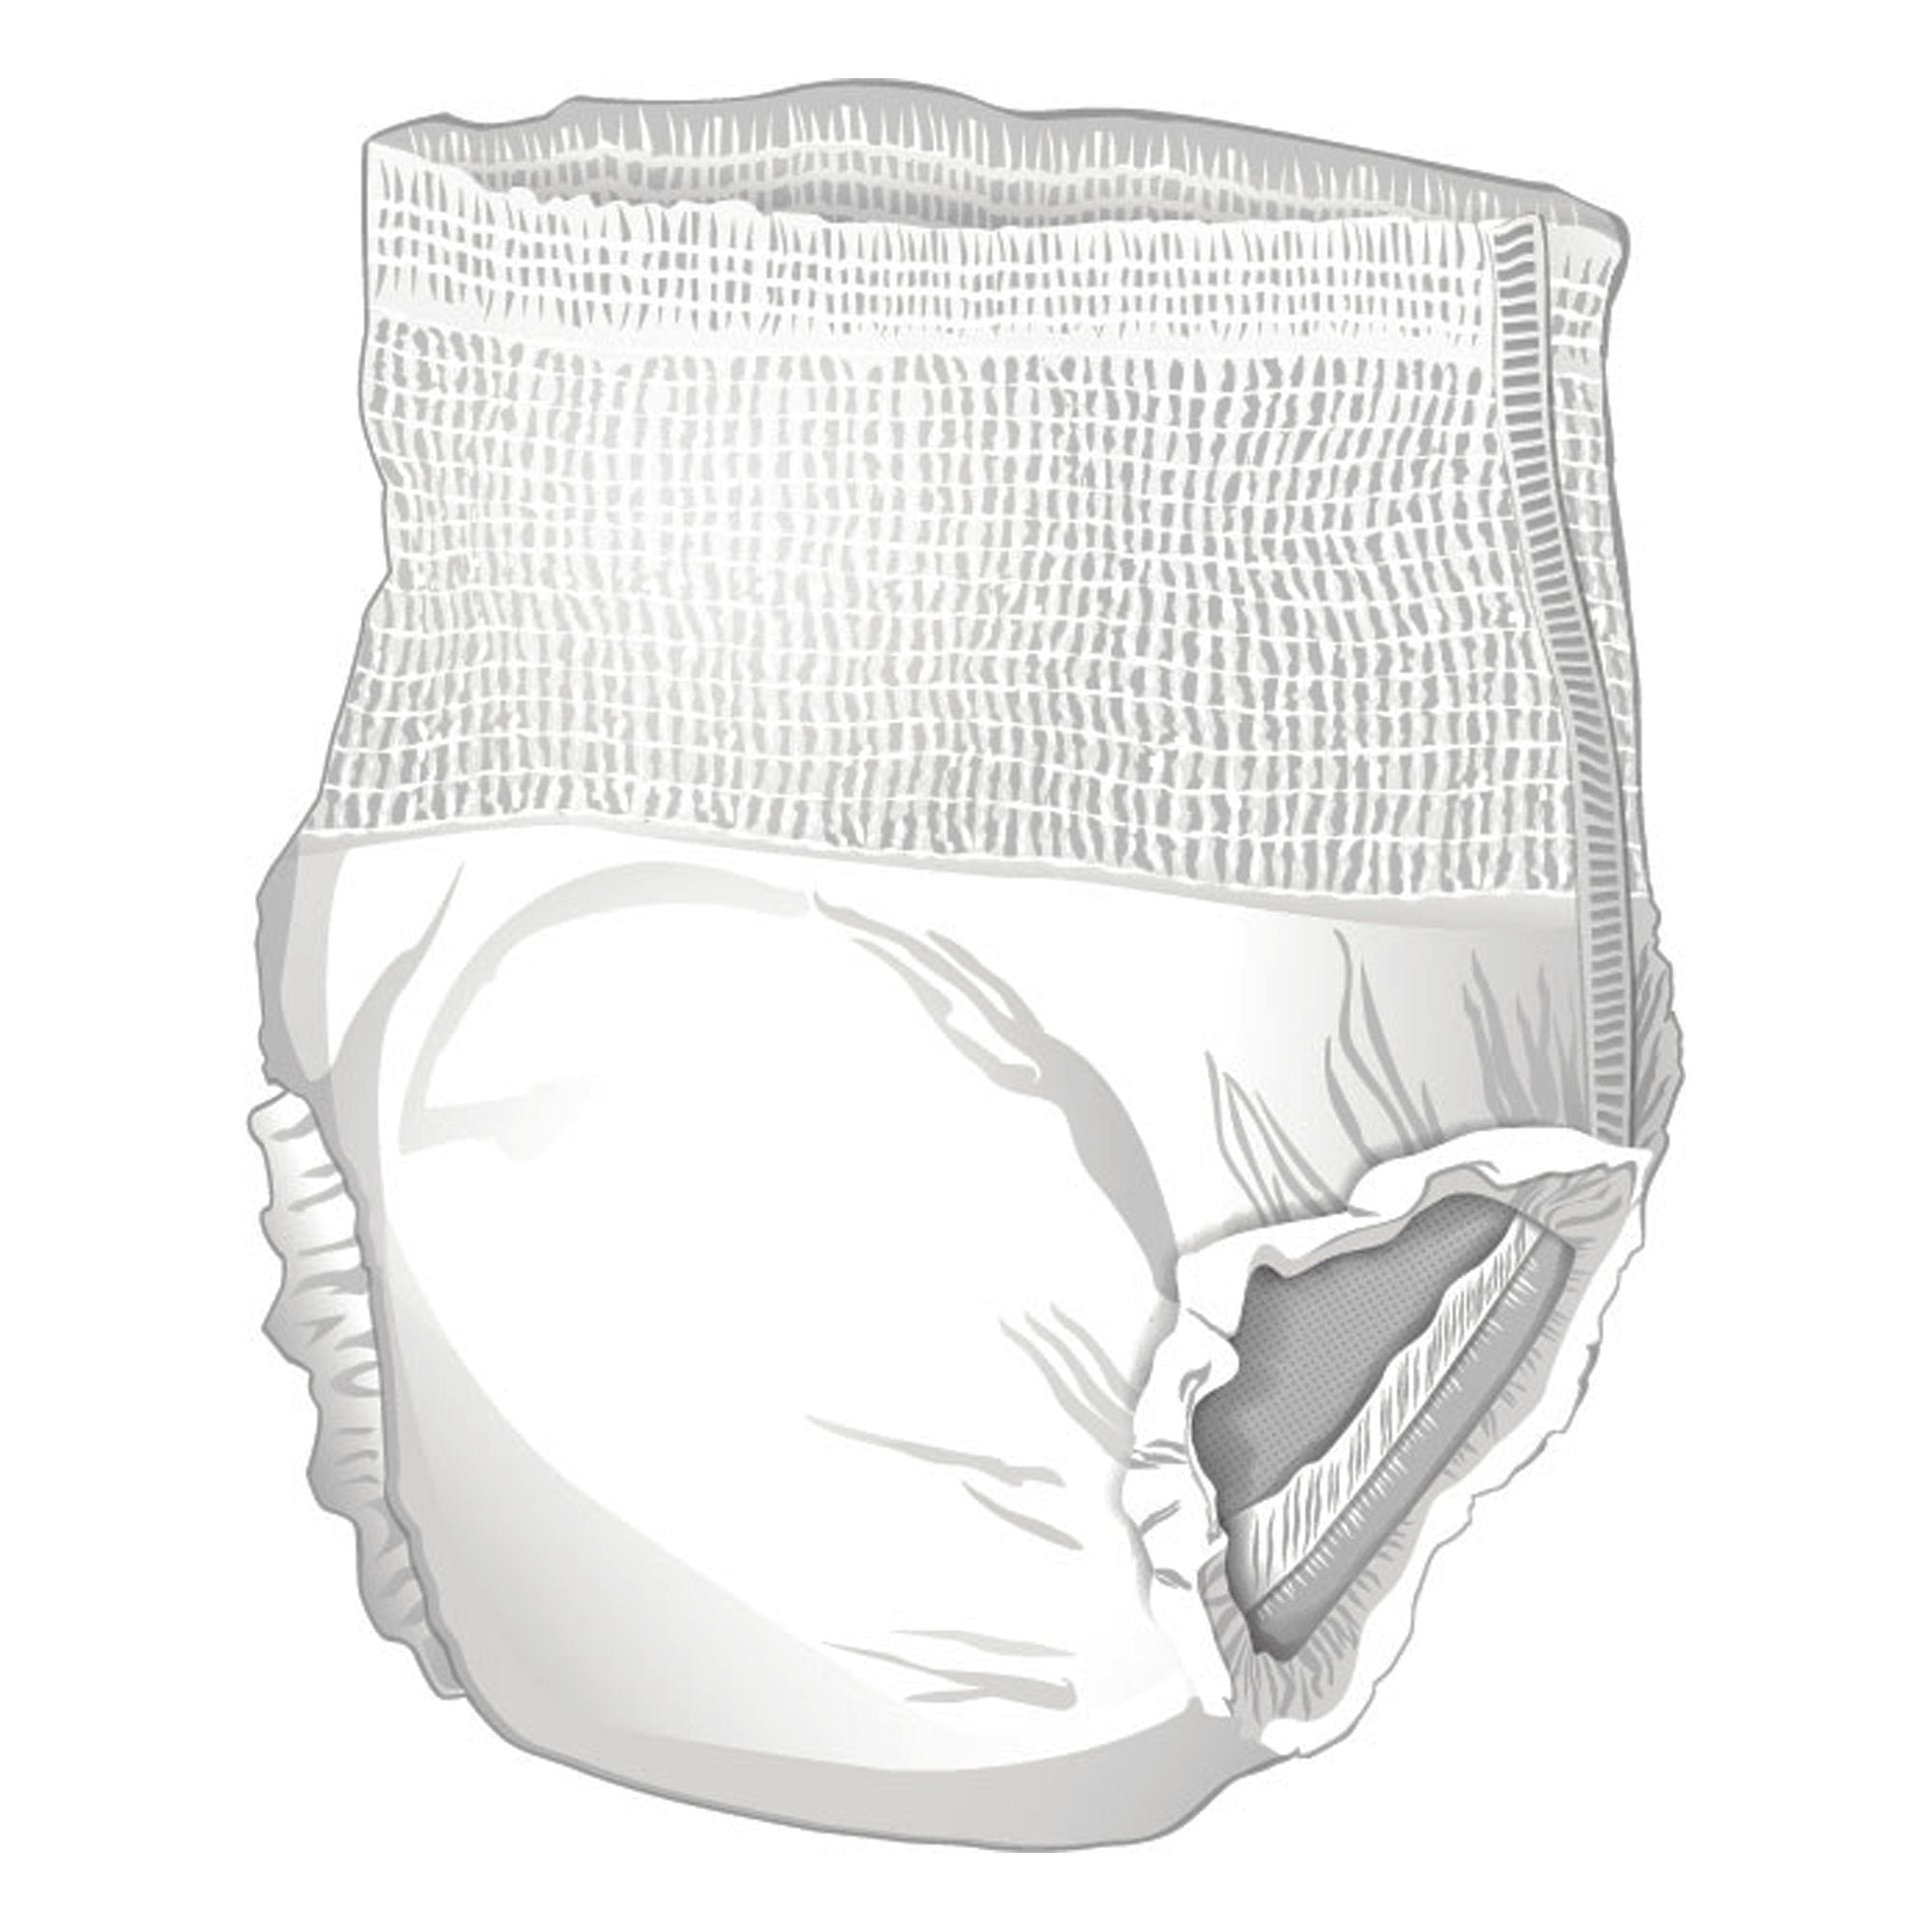 McKesson Ultra Heavy Absorbent Underwear, Small - Discreet Comfort